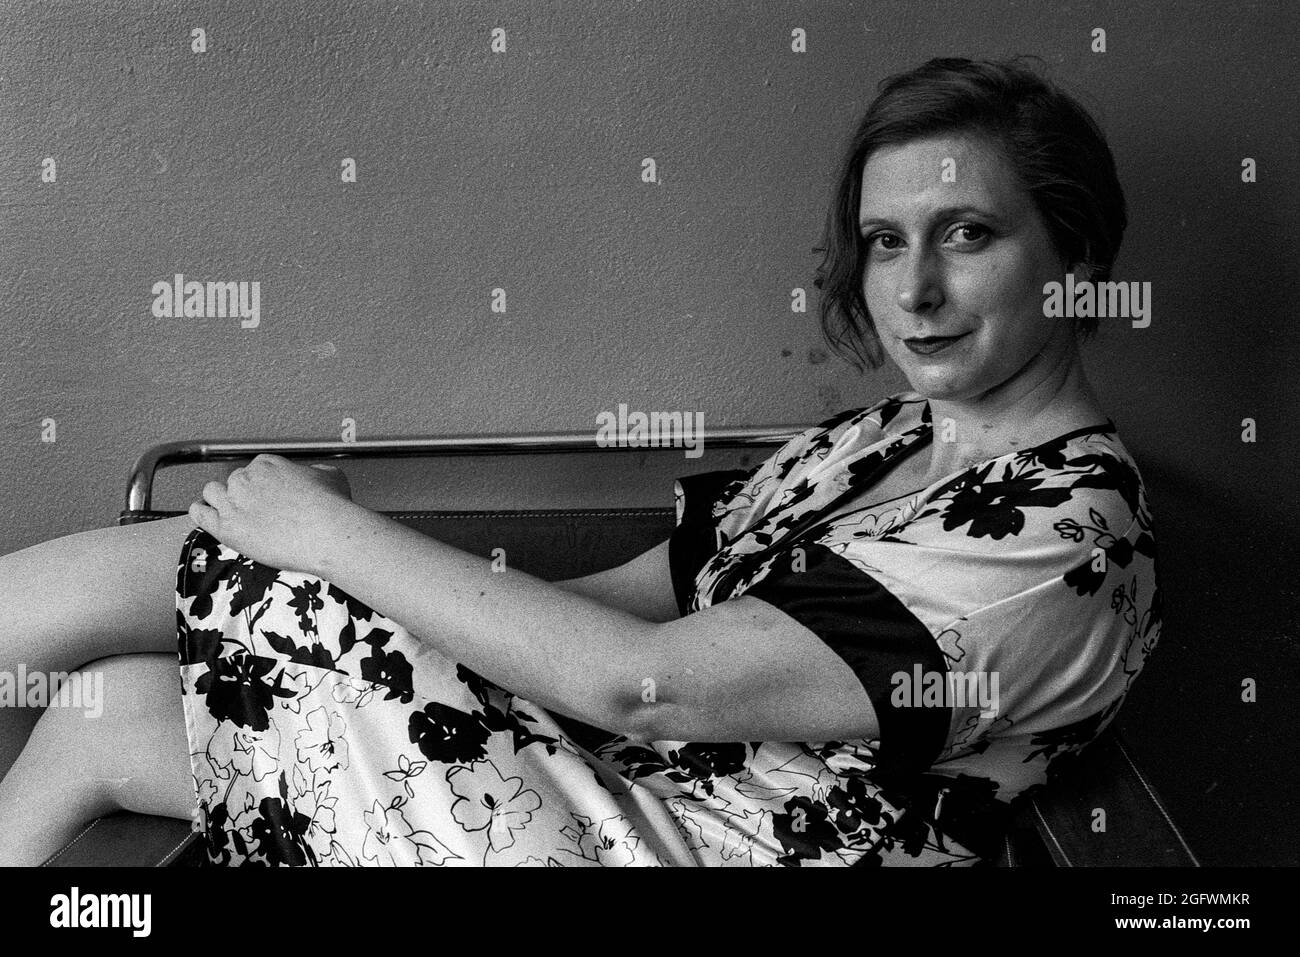 Tilburg, Netherlands. Studio Portrait of an adult, caucasian woman on analog black and white film. Stock Photo